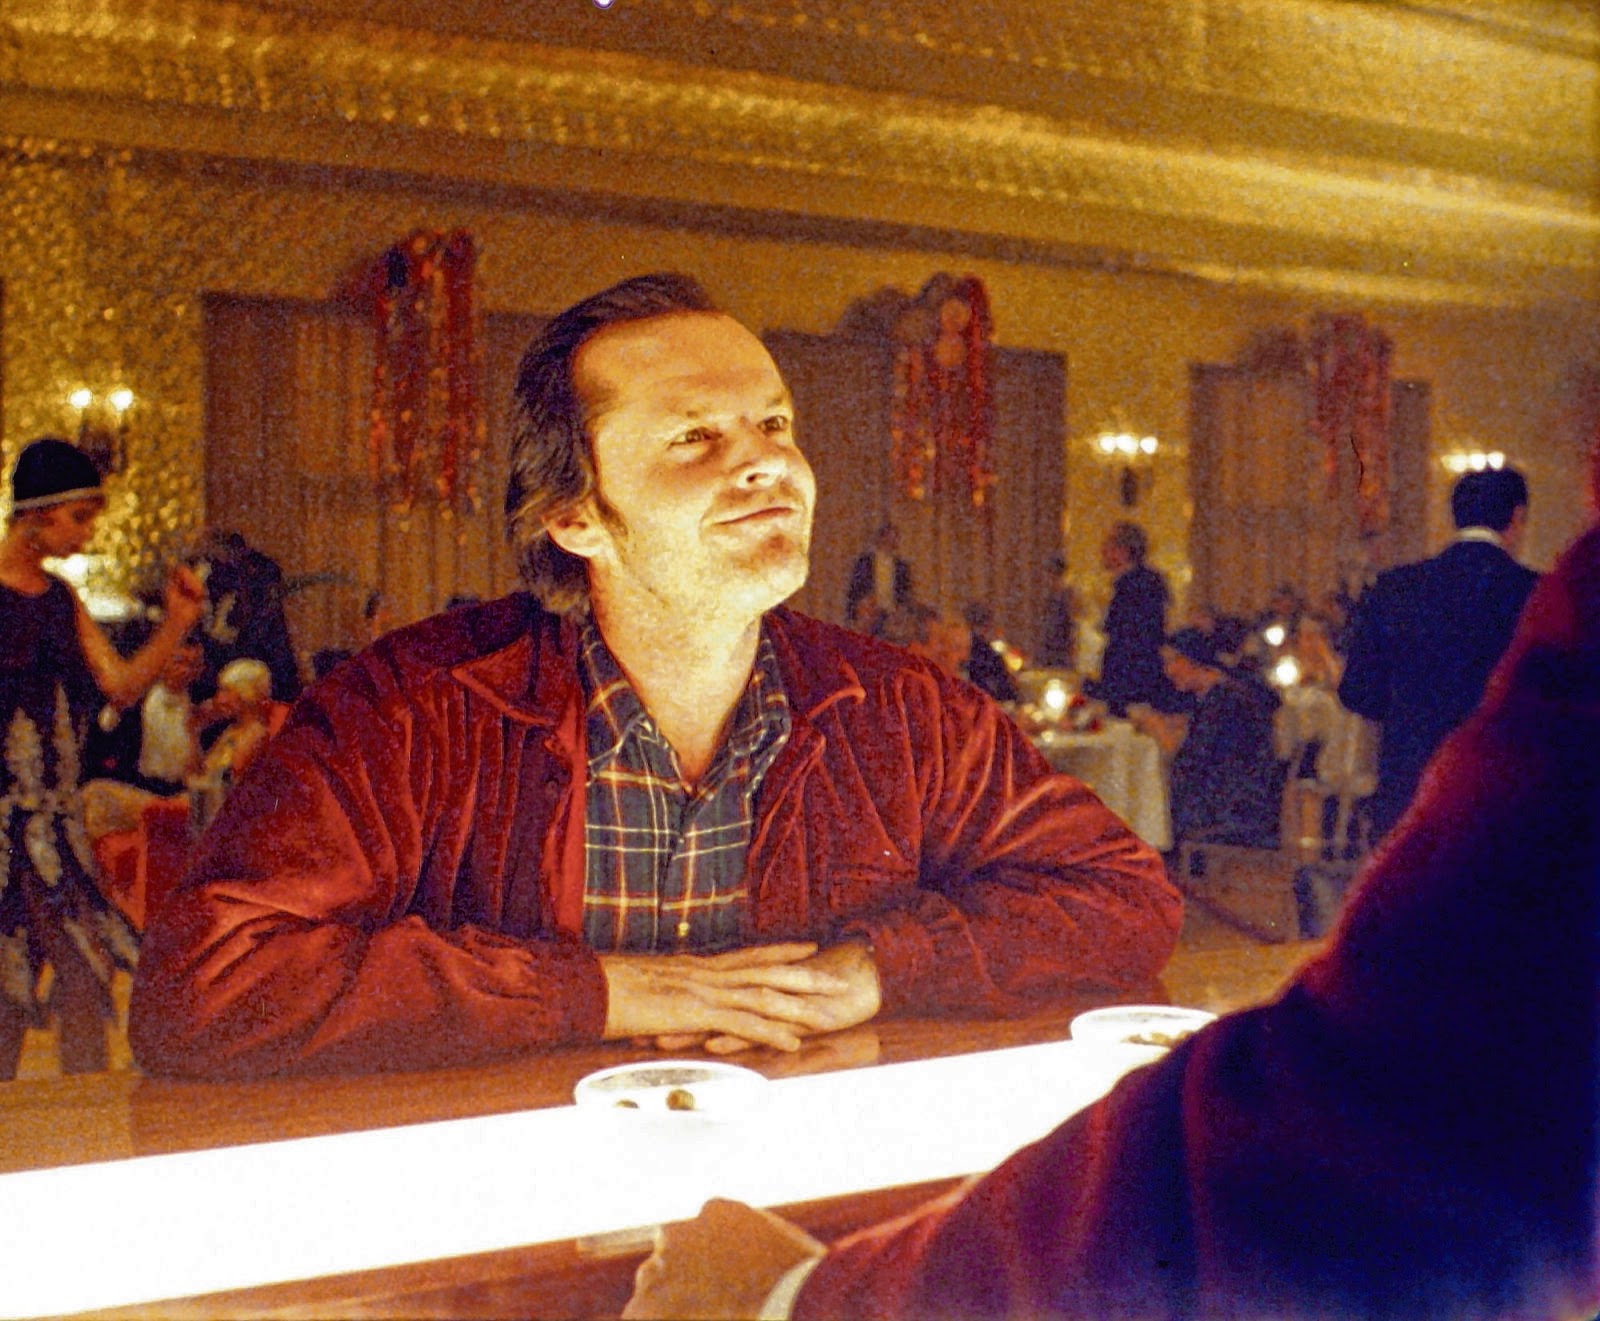 Jack Nicholson dans The Shining, horreur